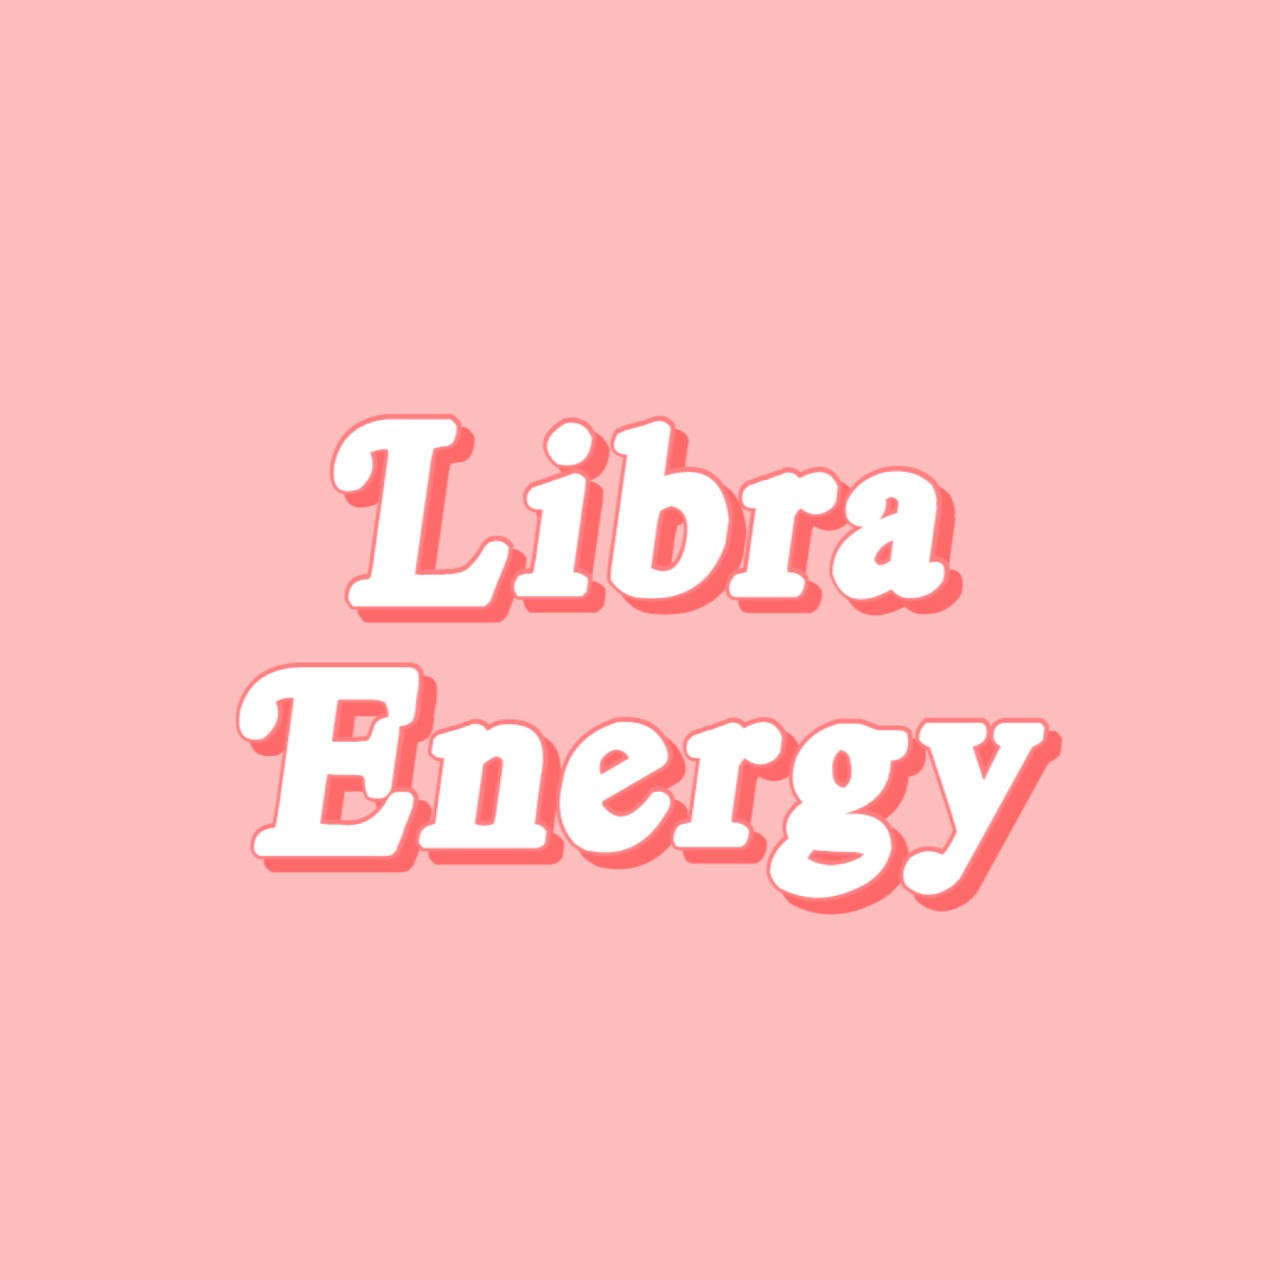 Libra Energy Pink Wallpaper